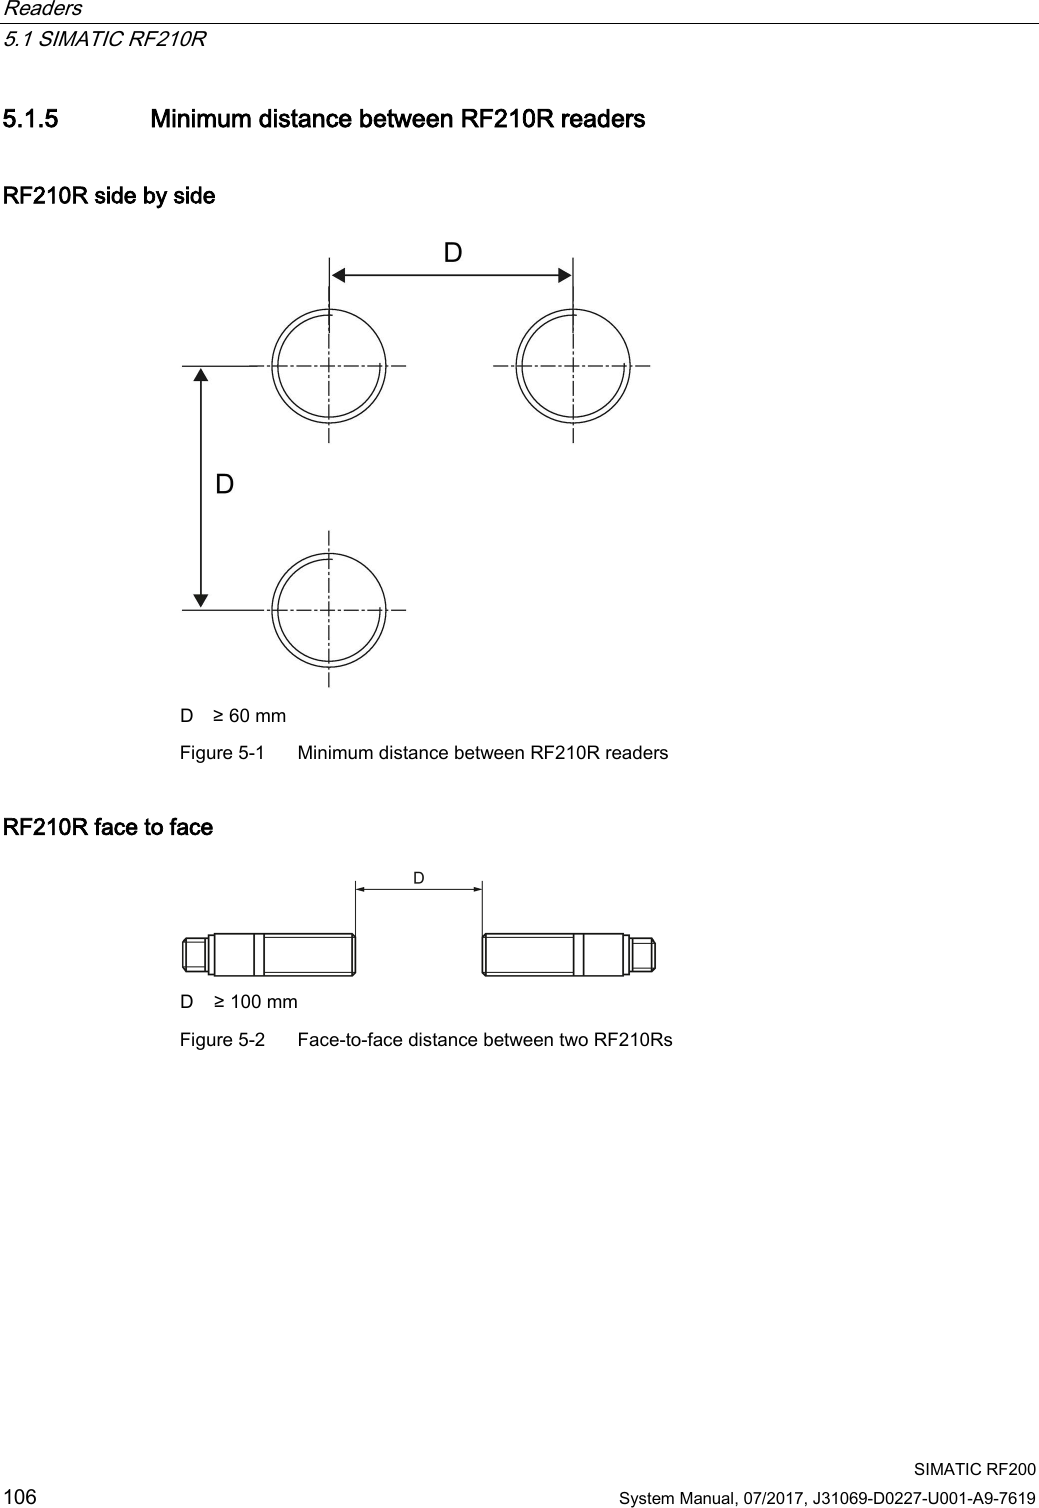 Readers   5.1 SIMATIC RF210R  SIMATIC RF200 106 System Manual, 07/2017, J31069-D0227-U001-A9-7619 5.1.5 Minimum distance between RF210R readers RF210R side by side  D ≥ 60 mm Figure 5-1  Minimum distance between RF210R readers RF210R face to face  D ≥ 100 mm Figure 5-2  Face-to-face distance between two RF210Rs 